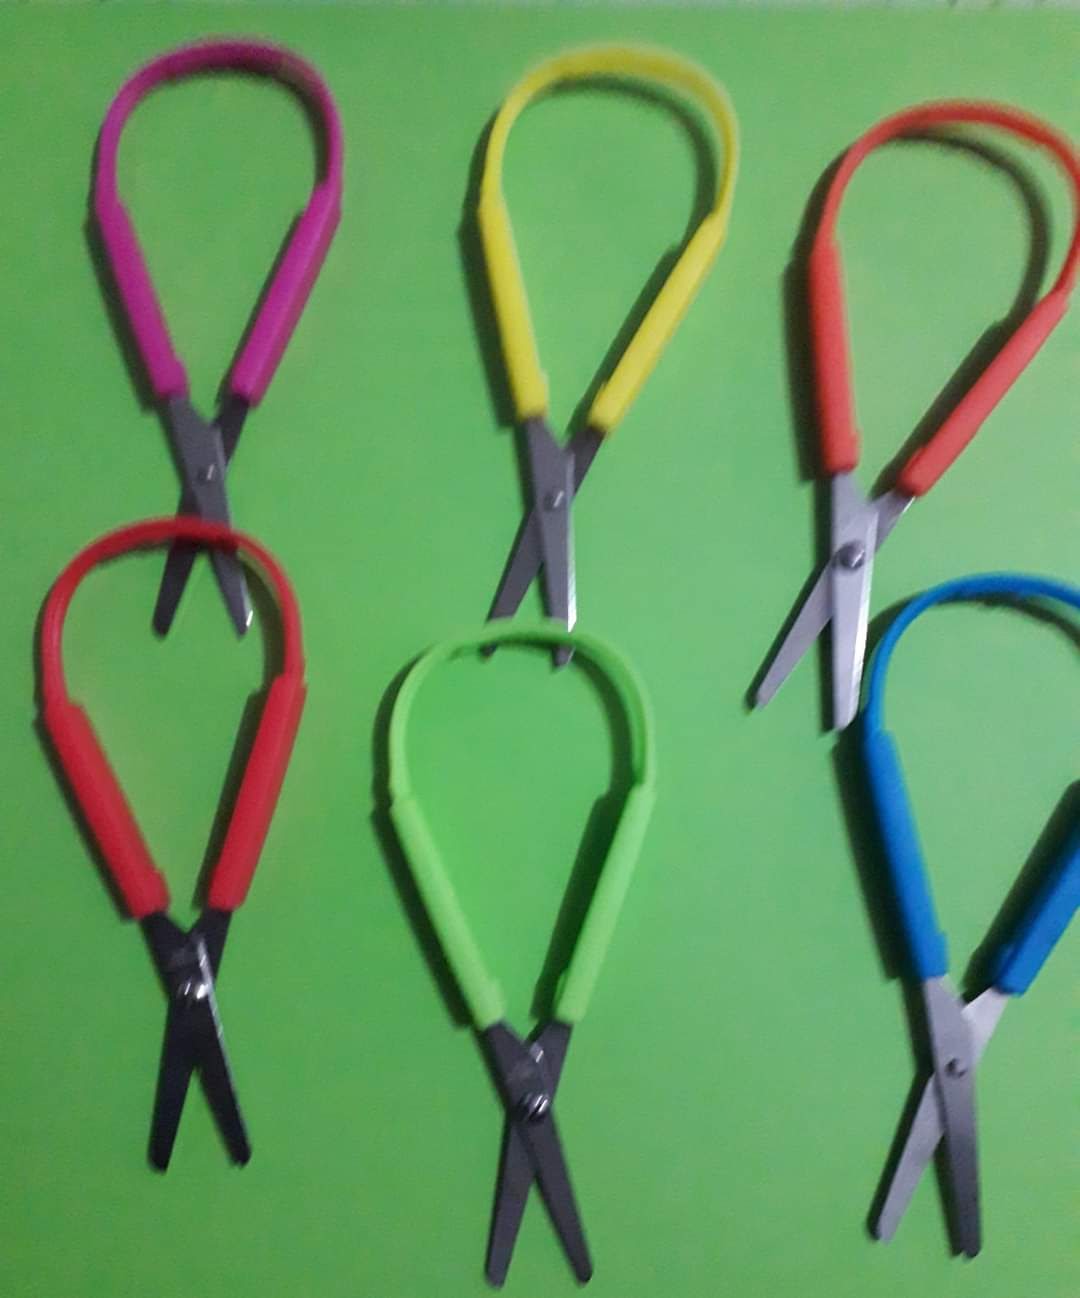 https://rewritestationerybb.com/wp-content/uploads/Special-needs-scissors.jpg